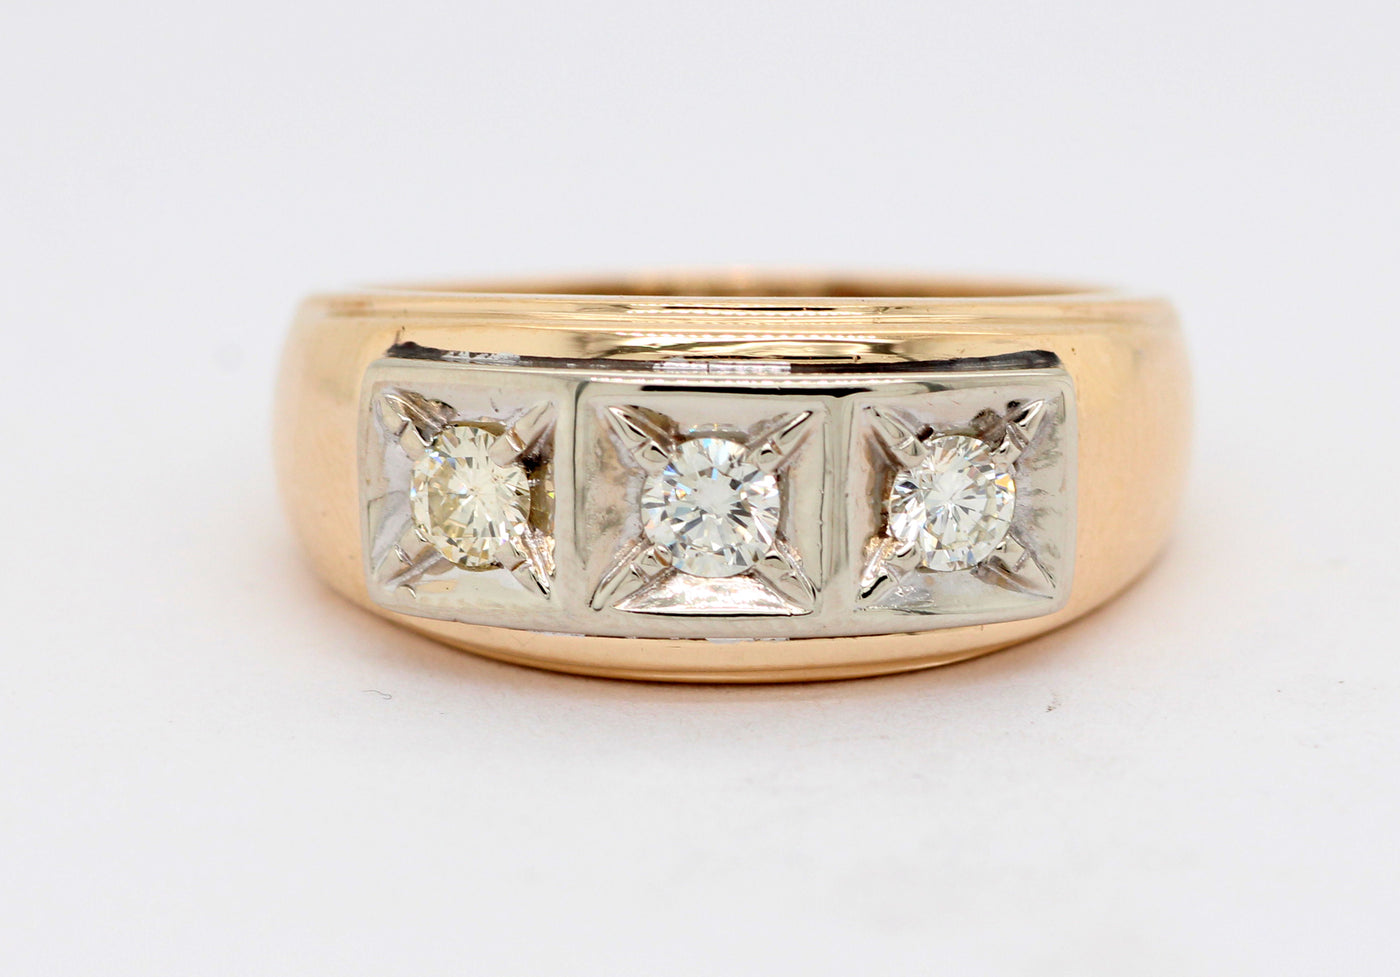 Estate 14KTT .50 Cttw Diamond Gents Ring, JK-SI2